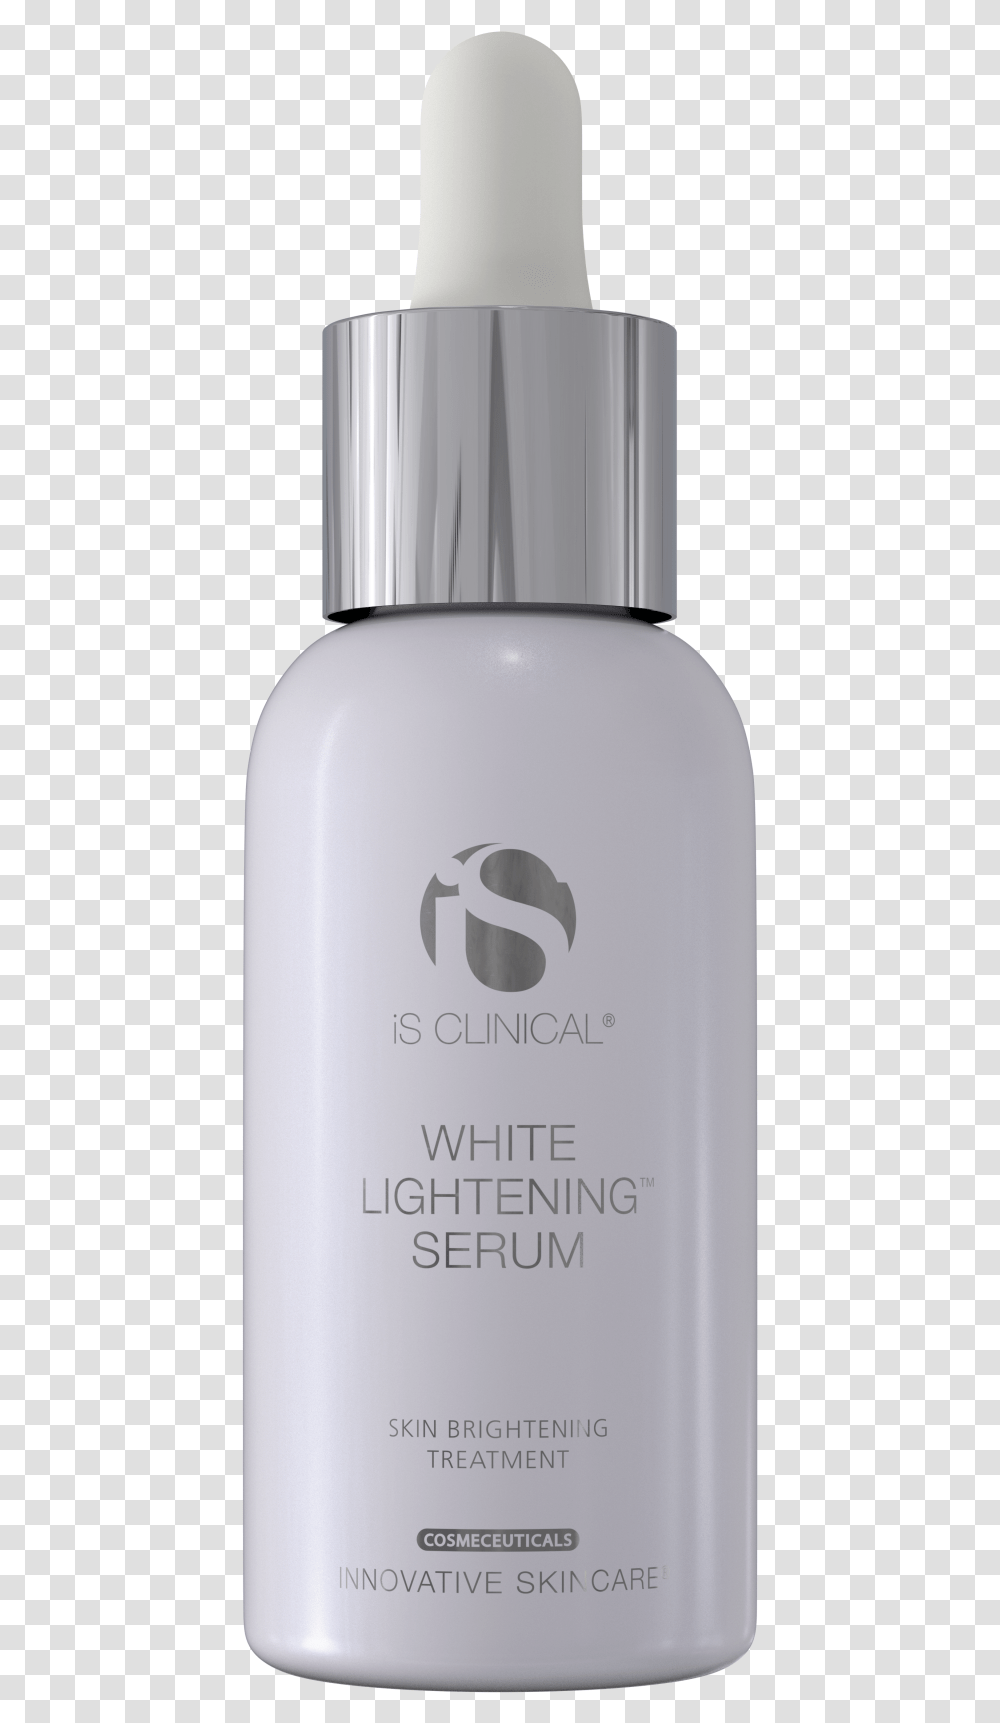 Is Clinical White Lightening Serum, Jar, Bottle, Milk, Beverage Transparent Png